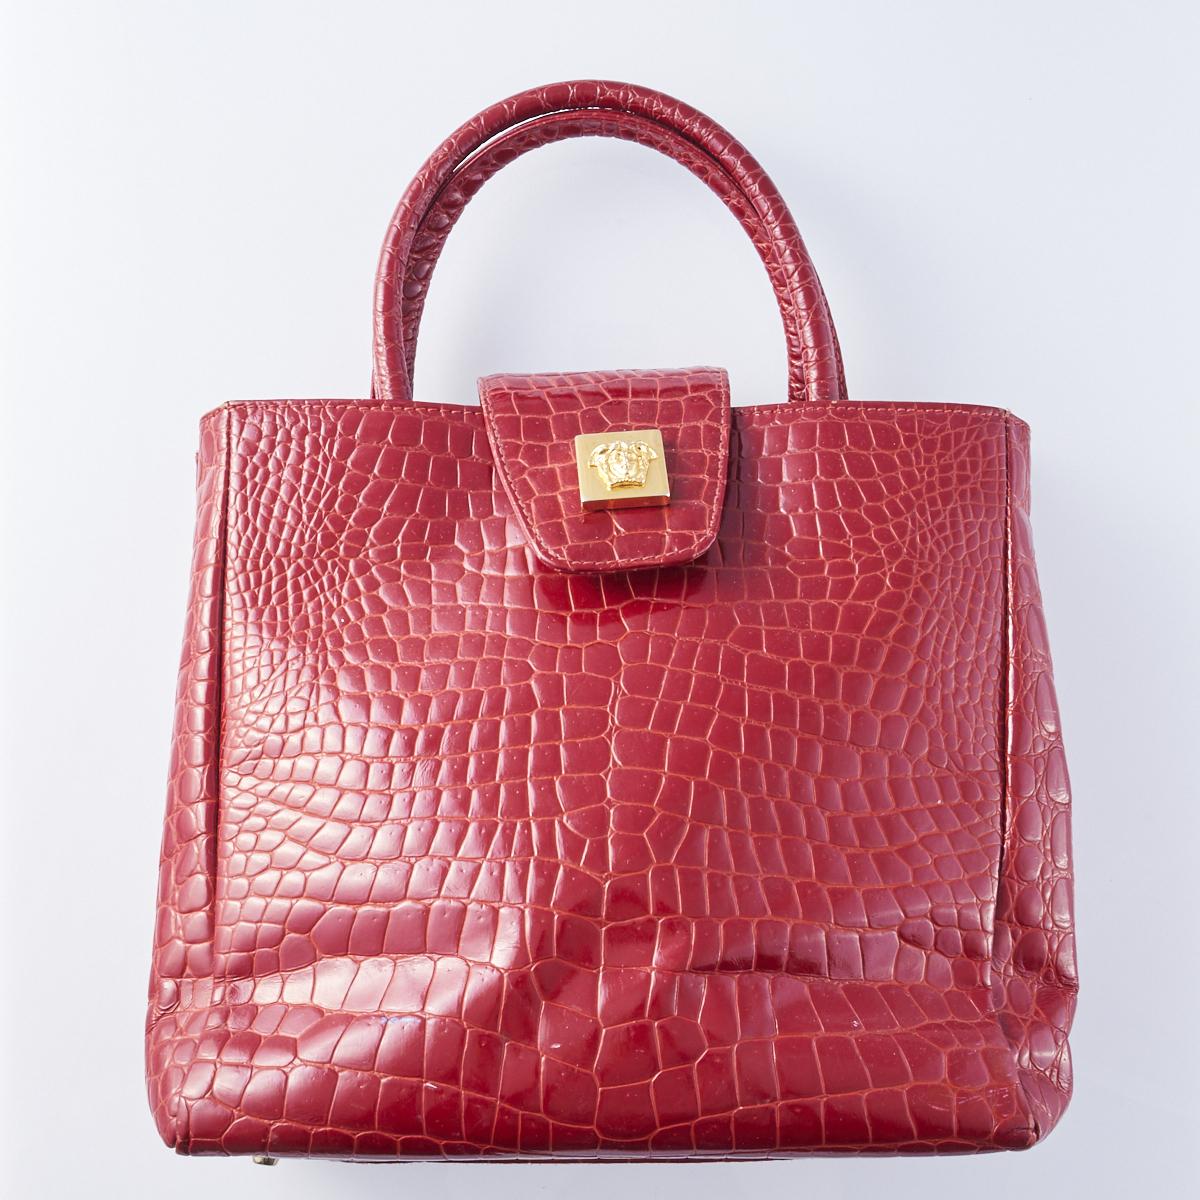 Sold at Auction: Gianni Versace Croc Embossed Shoulder Bag